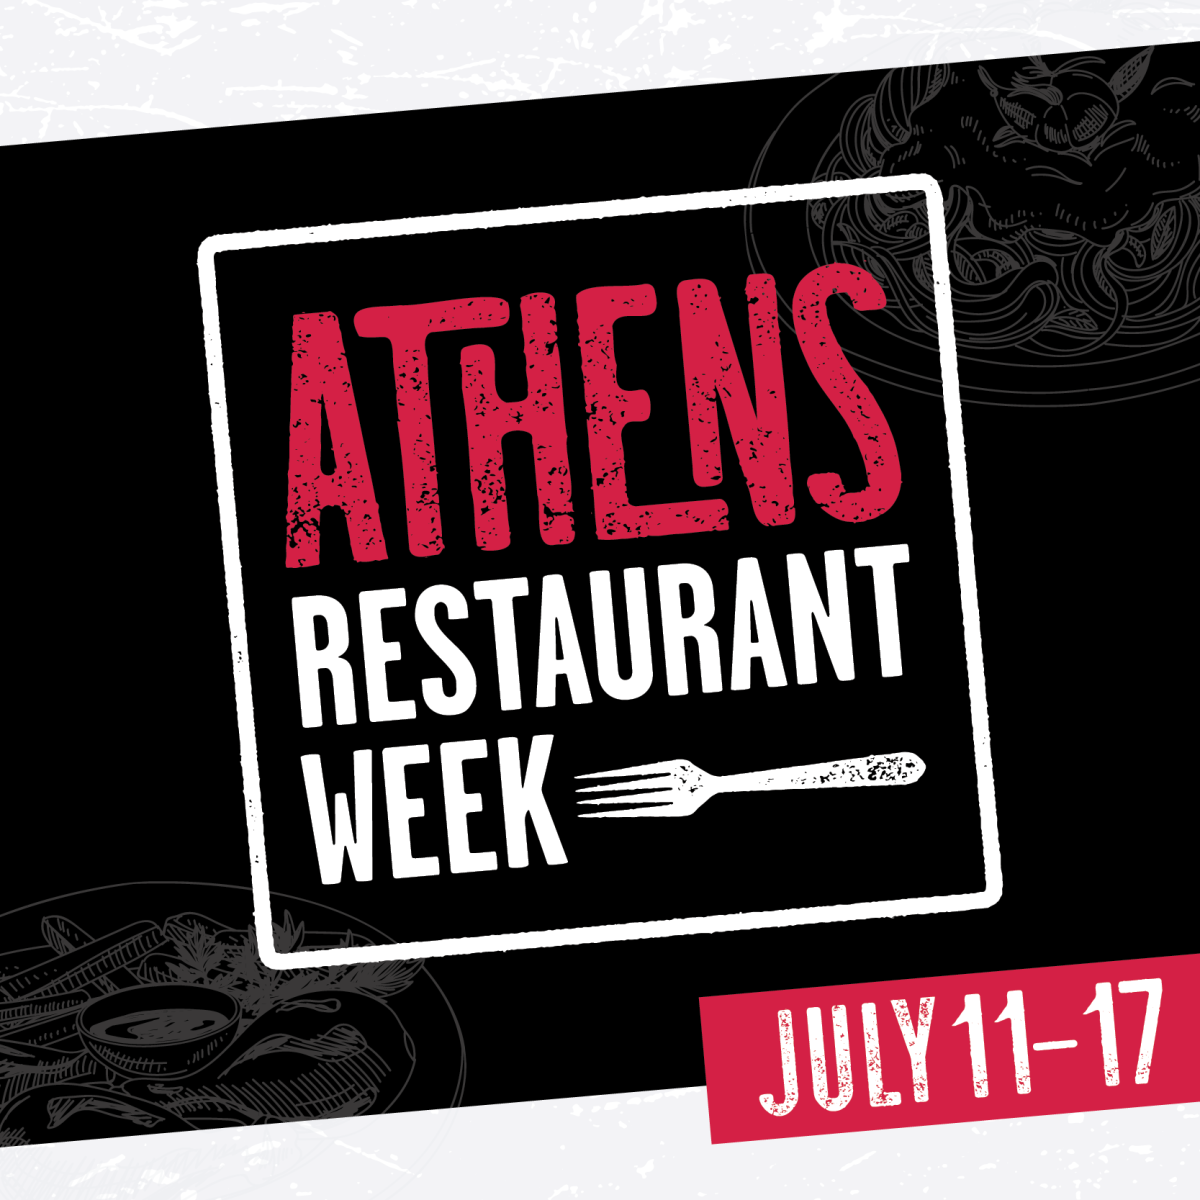 Sign up for Athens Restaurant Week July 1117, 2022